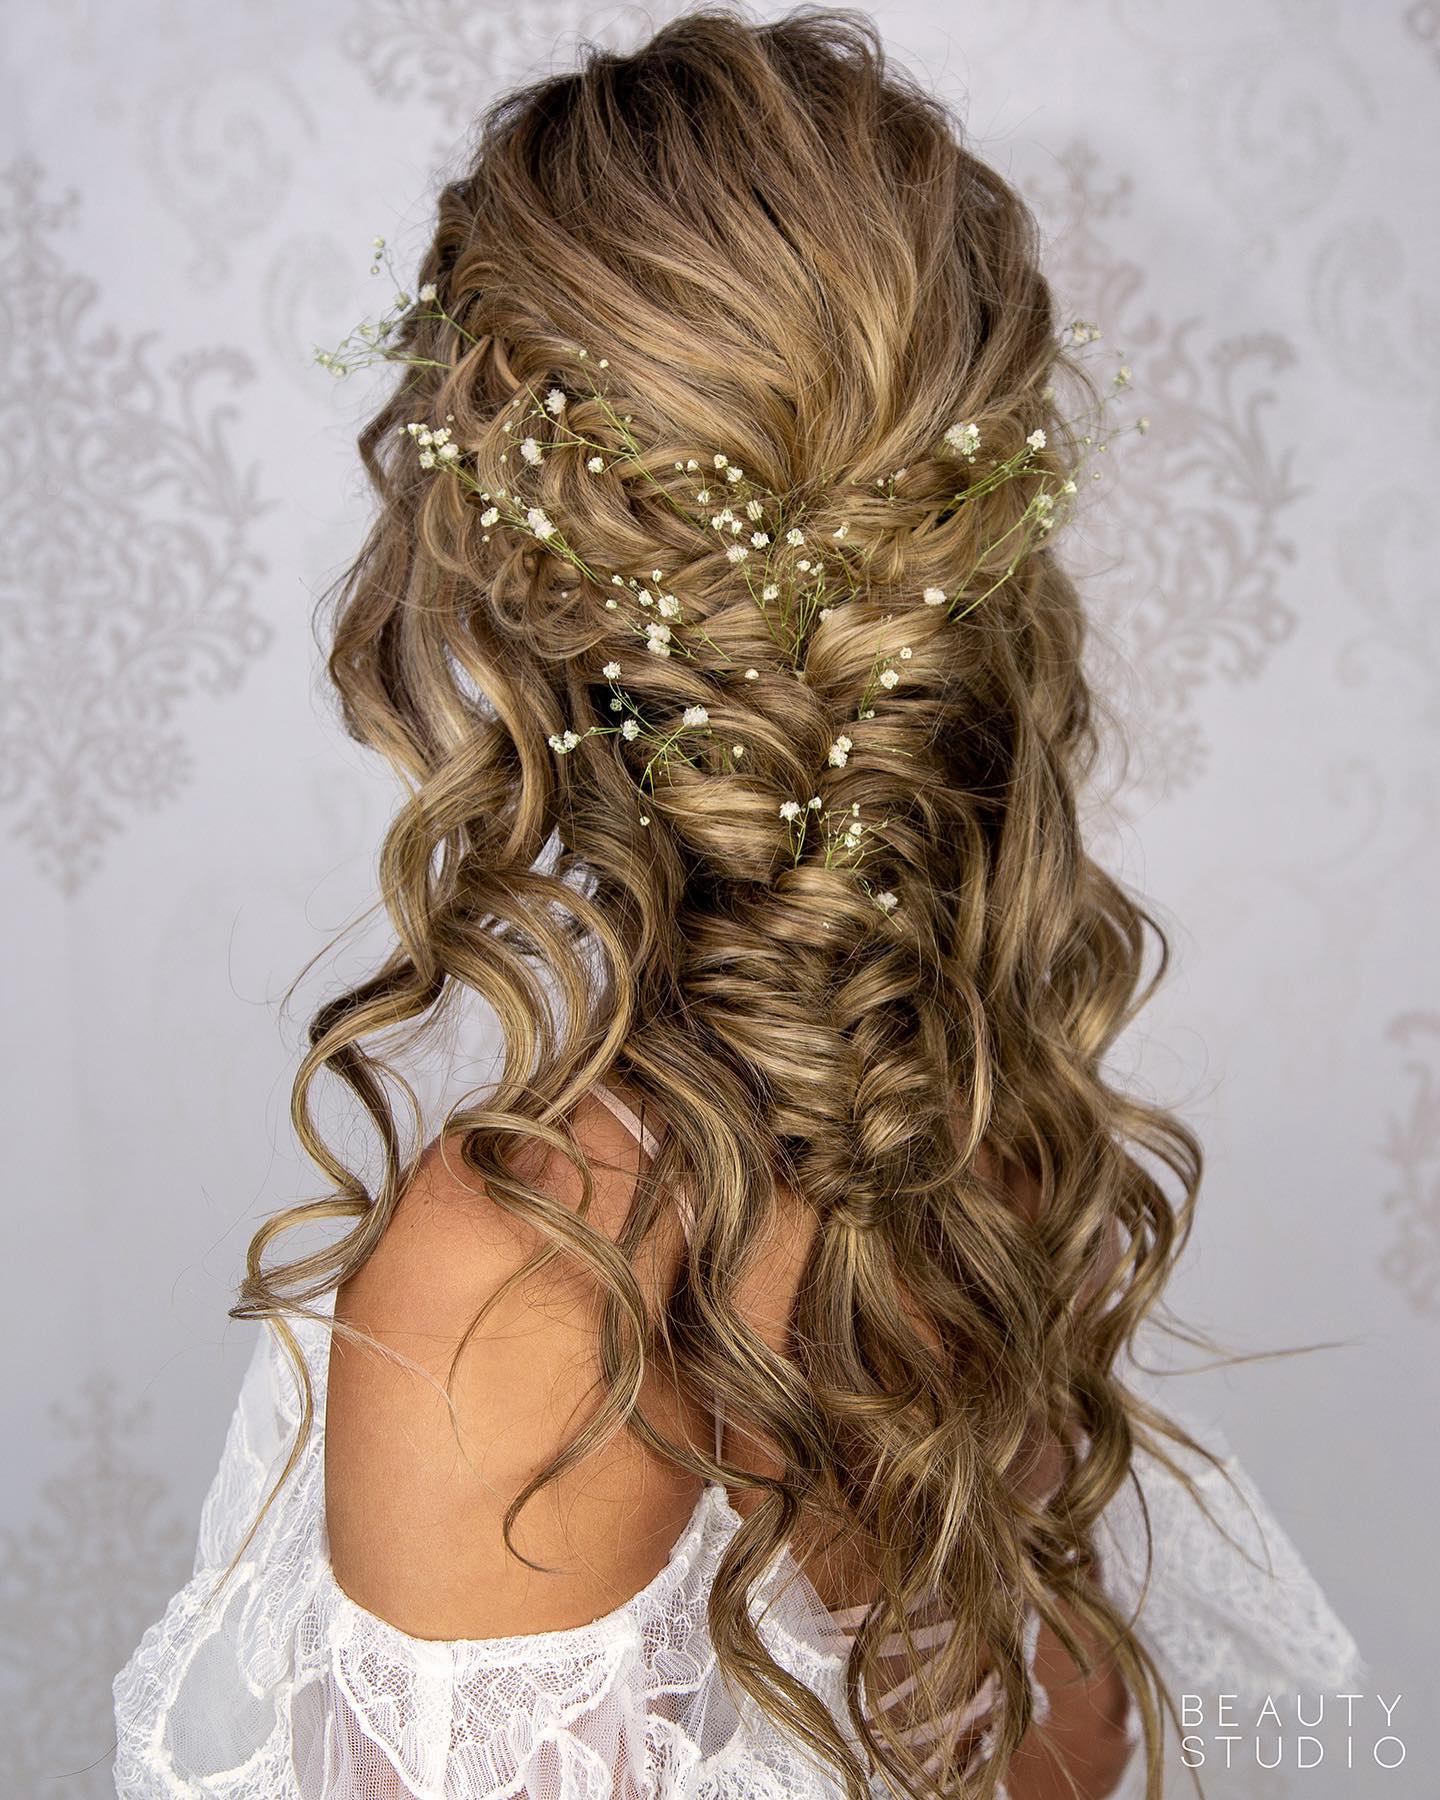 50 Insta Worthy Prom Hair Ideas for All Kinds of Locks - Hair Adviser